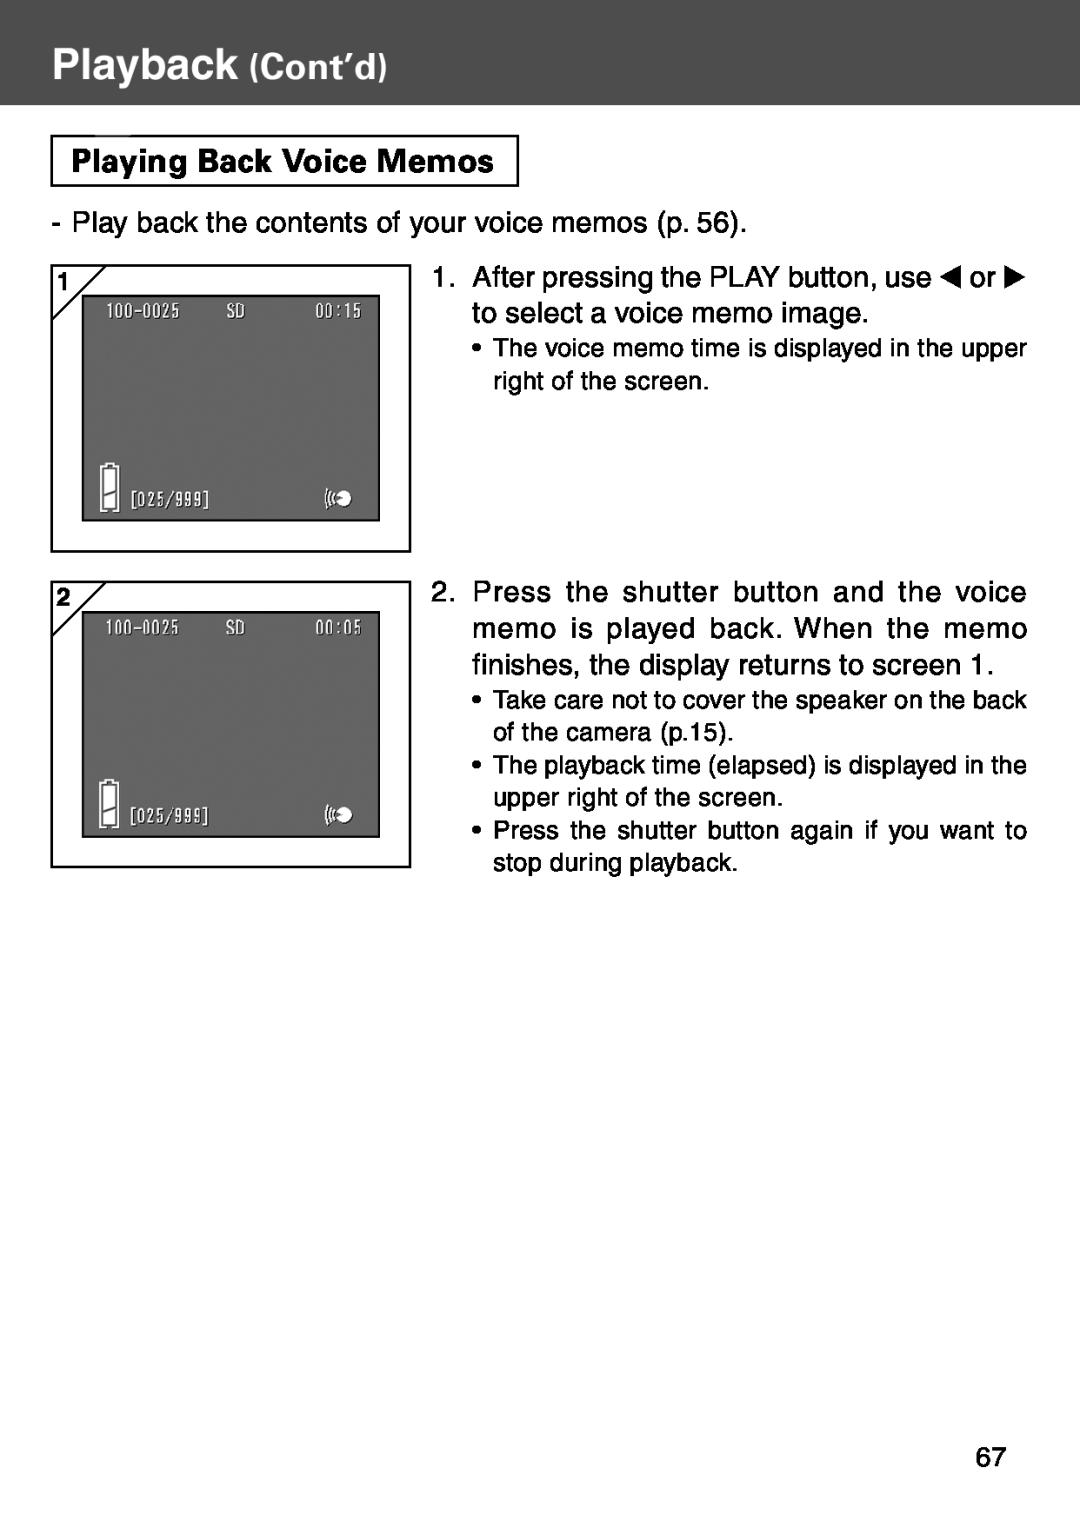 Konica Minolta KD-500Z user manual Playing Back Voice Memos, Playback Cont’d 